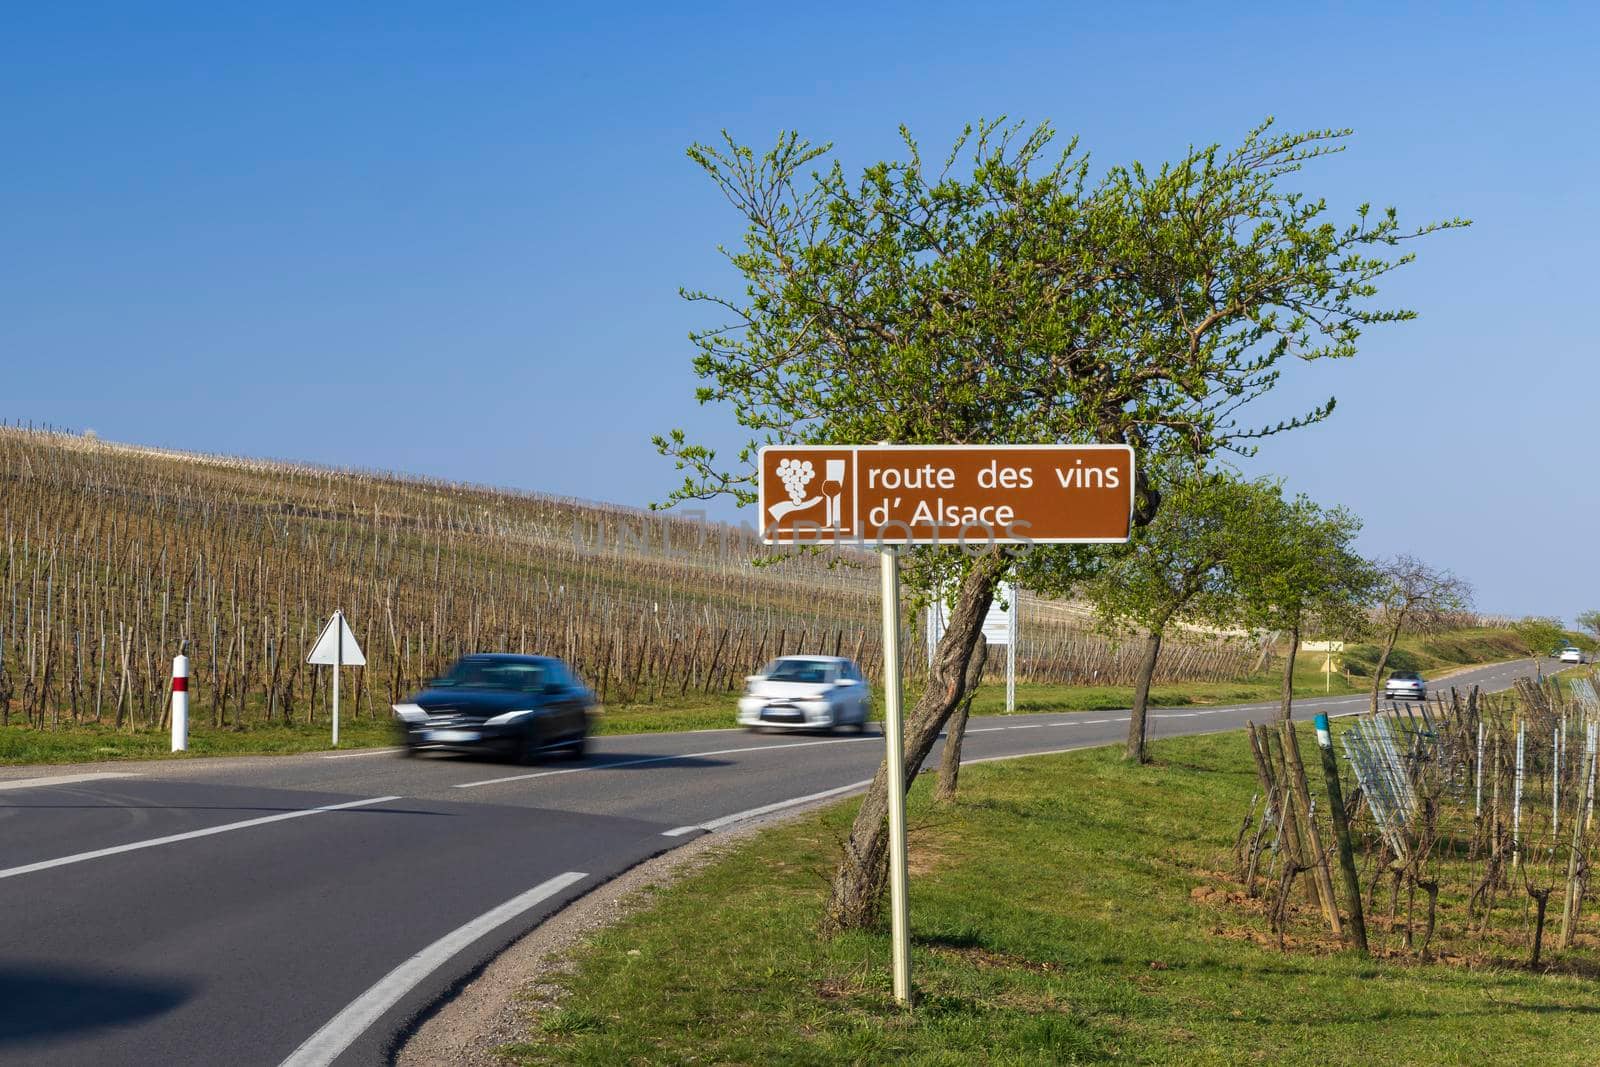 Wine road near Colmar, Alsace, France by phbcz